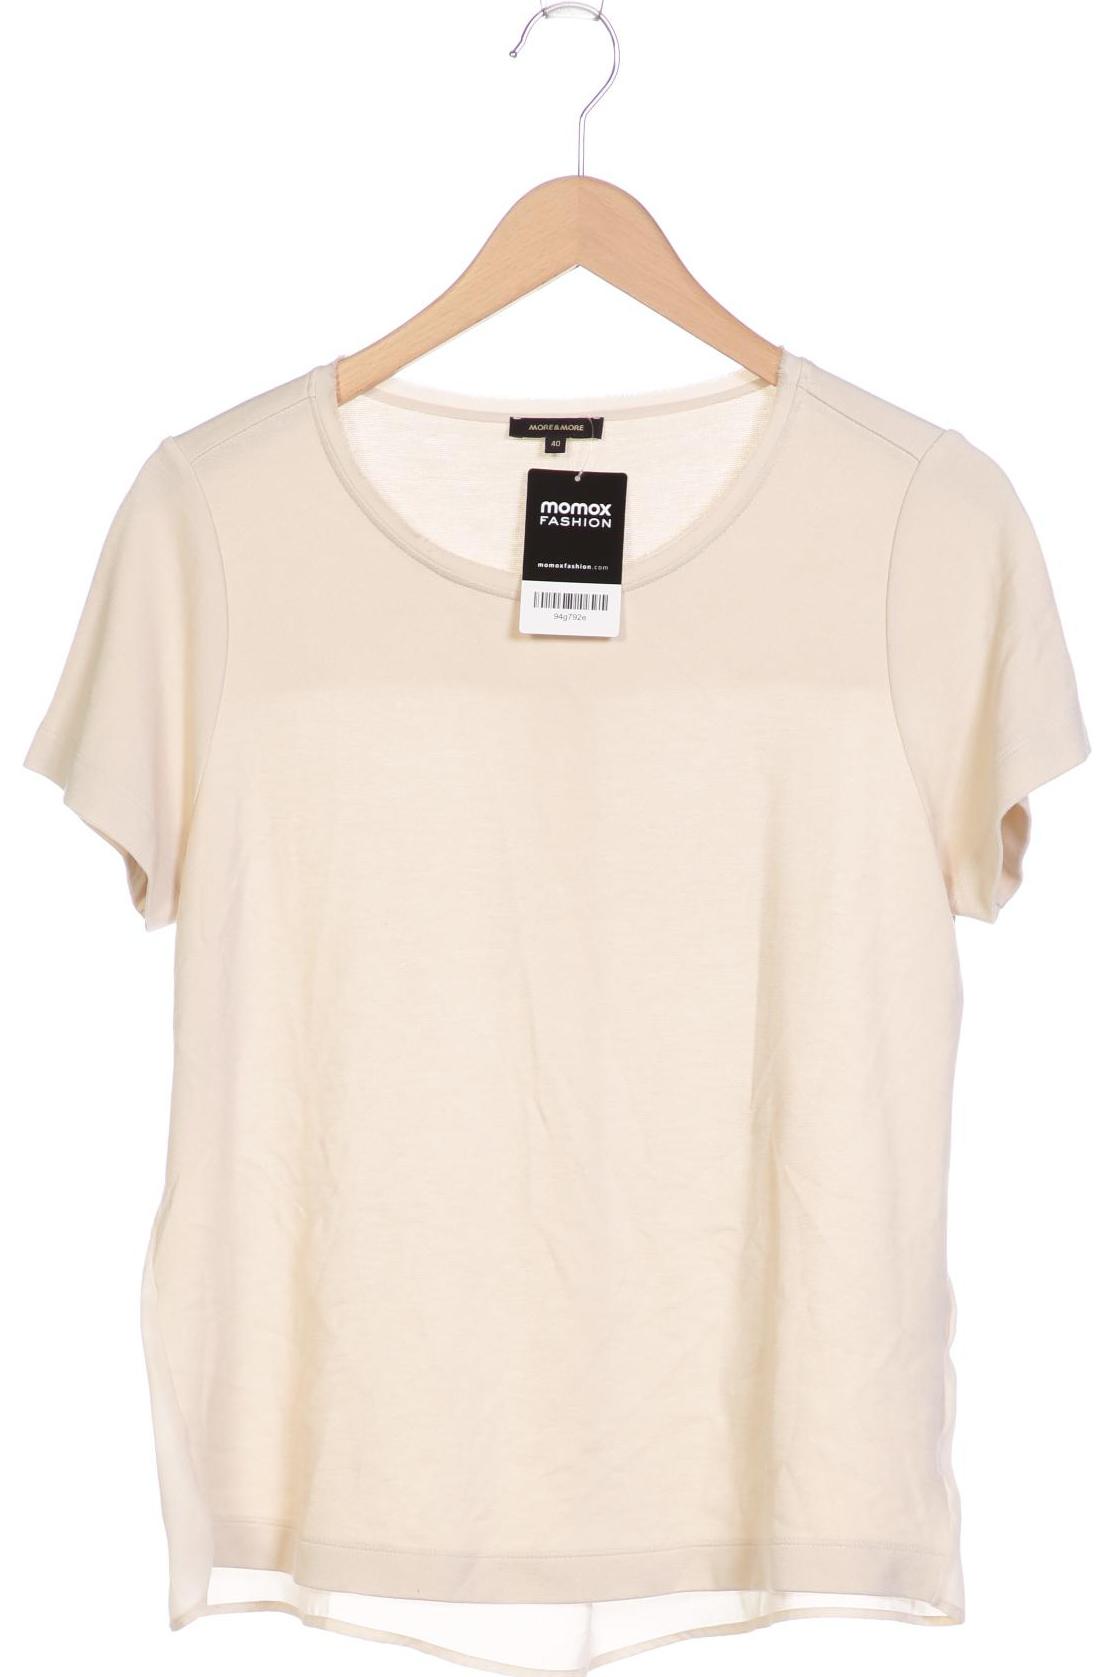 More & More Damen T-Shirt, cremeweiß von MORE & MORE